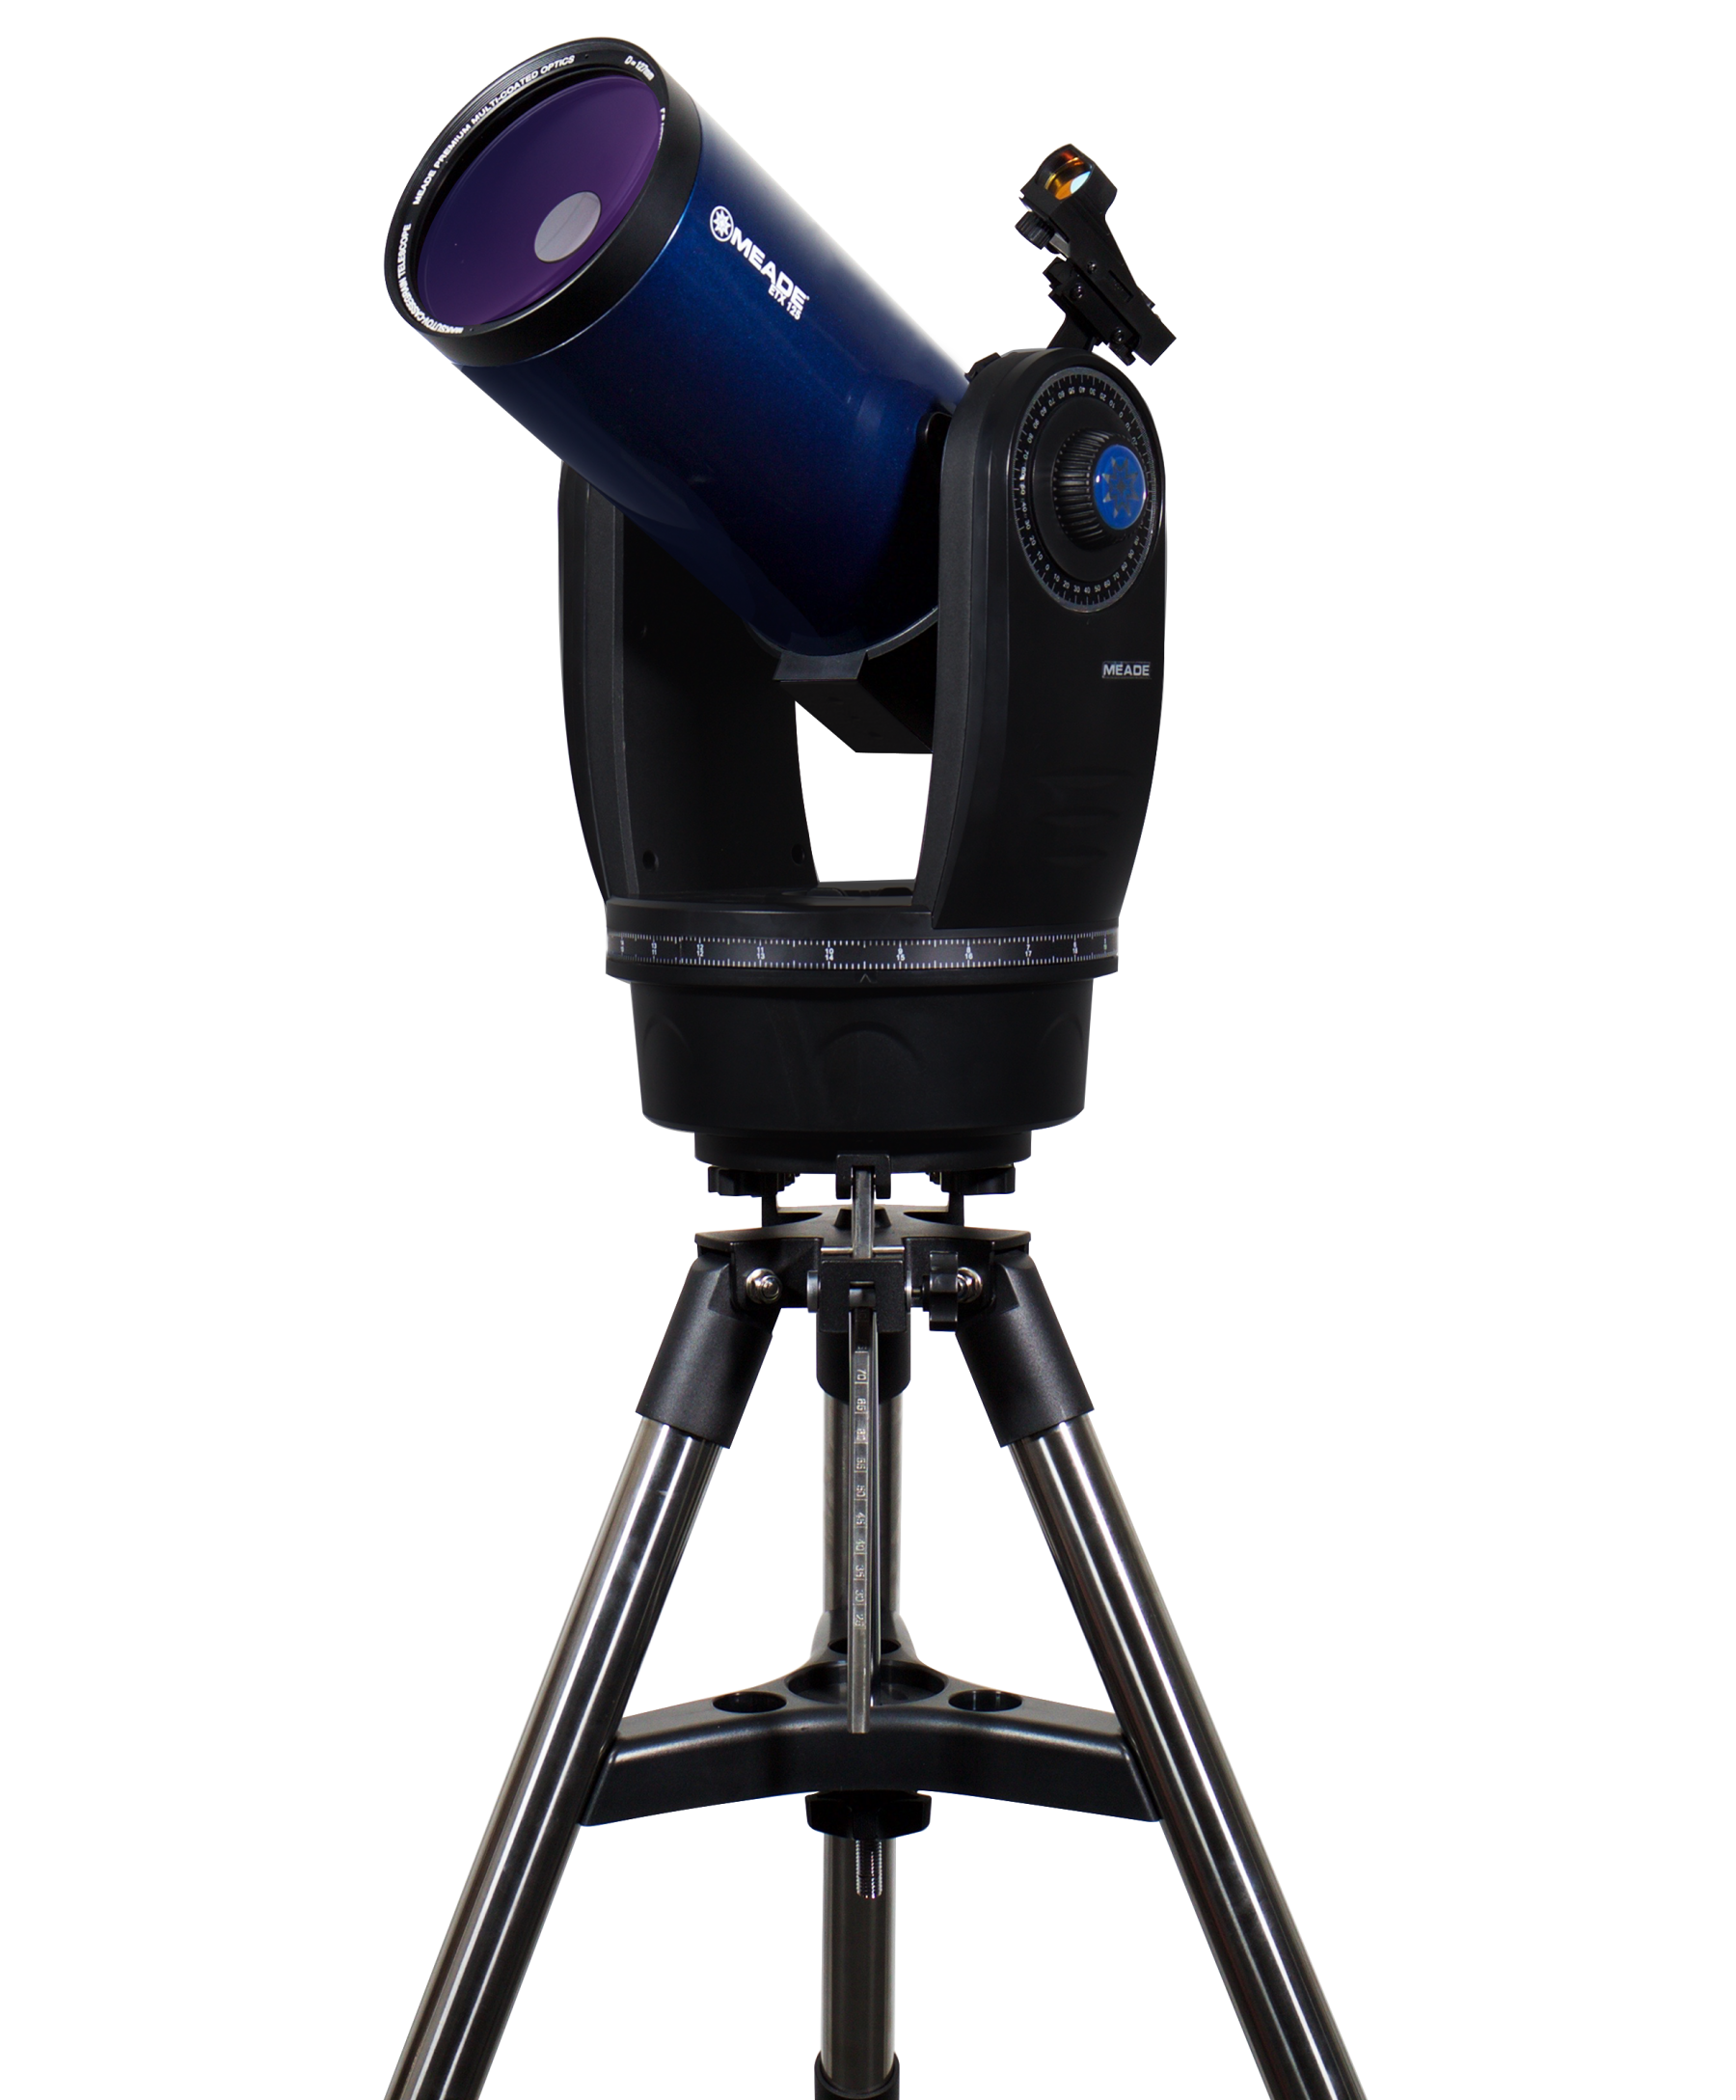 Meade ETX 125 Observer Maksutov Cassegrain Telescope